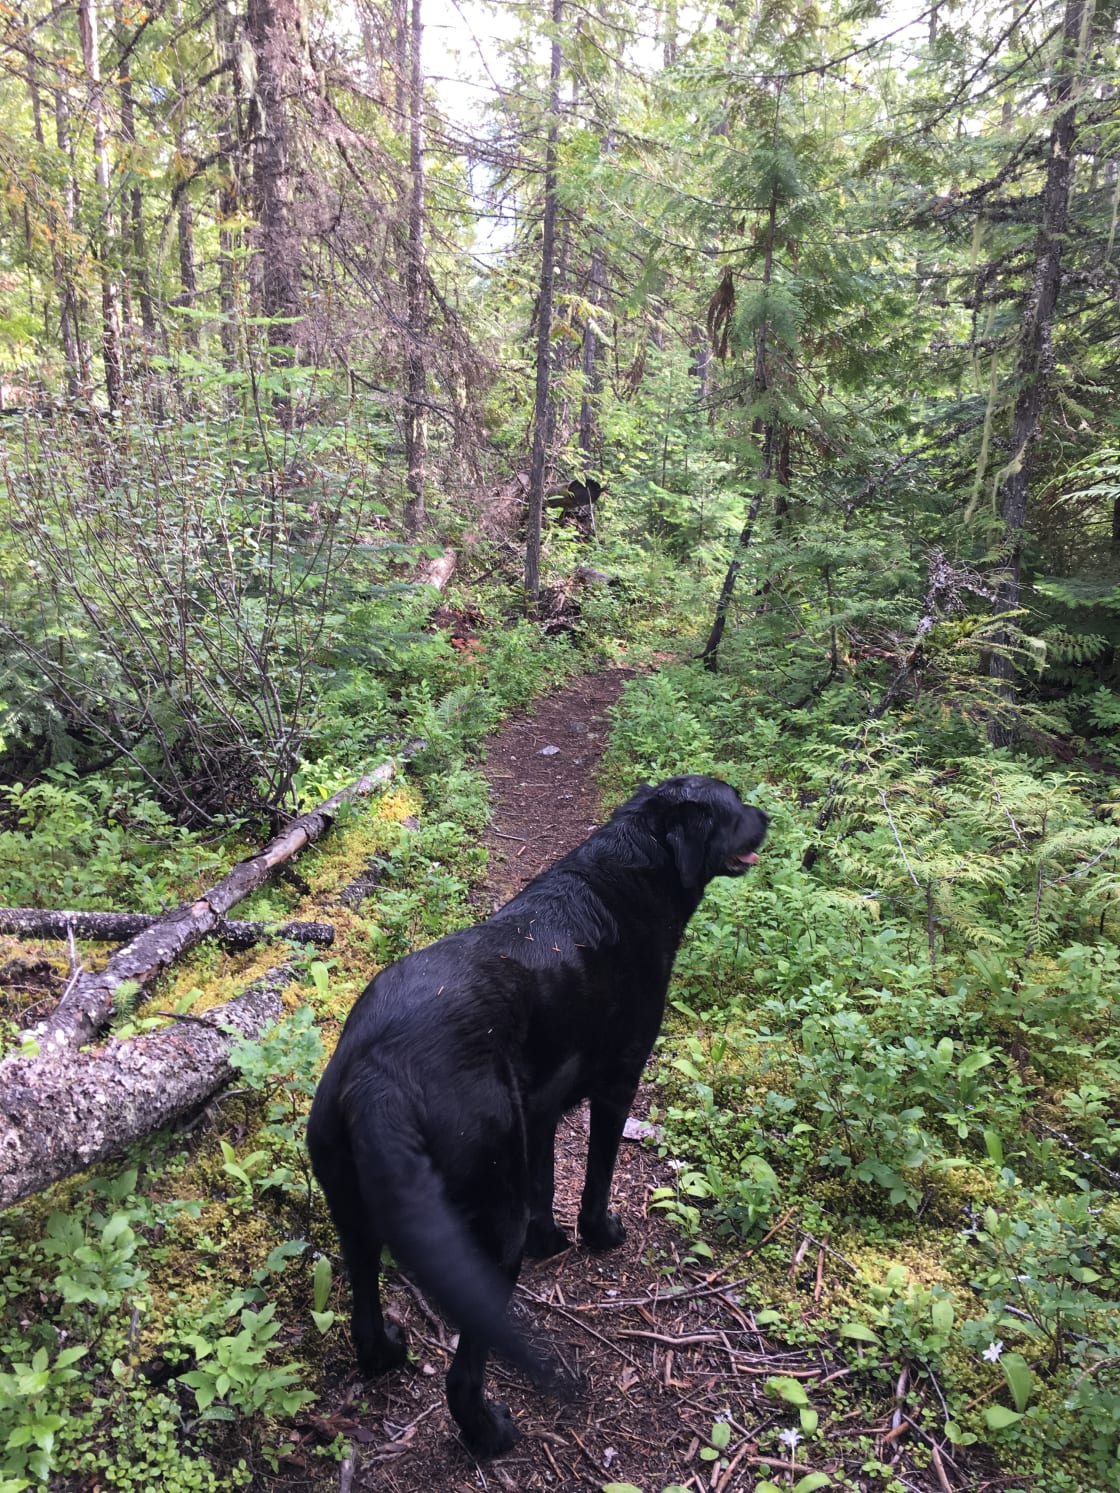 Dog friendly trails all close by